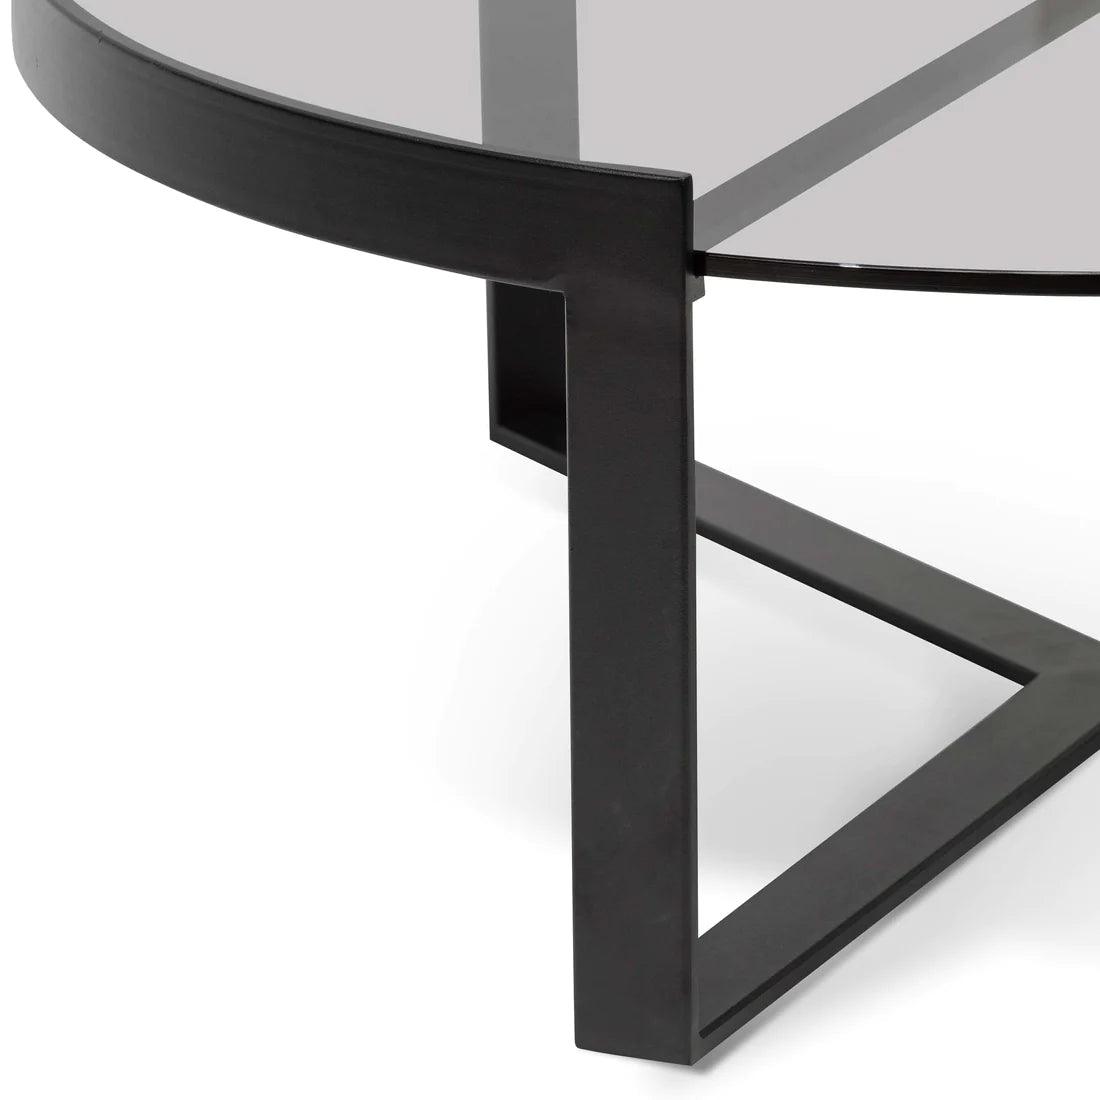 Alexis 90cm Glass Coffee Table - Black - Furniture Castle